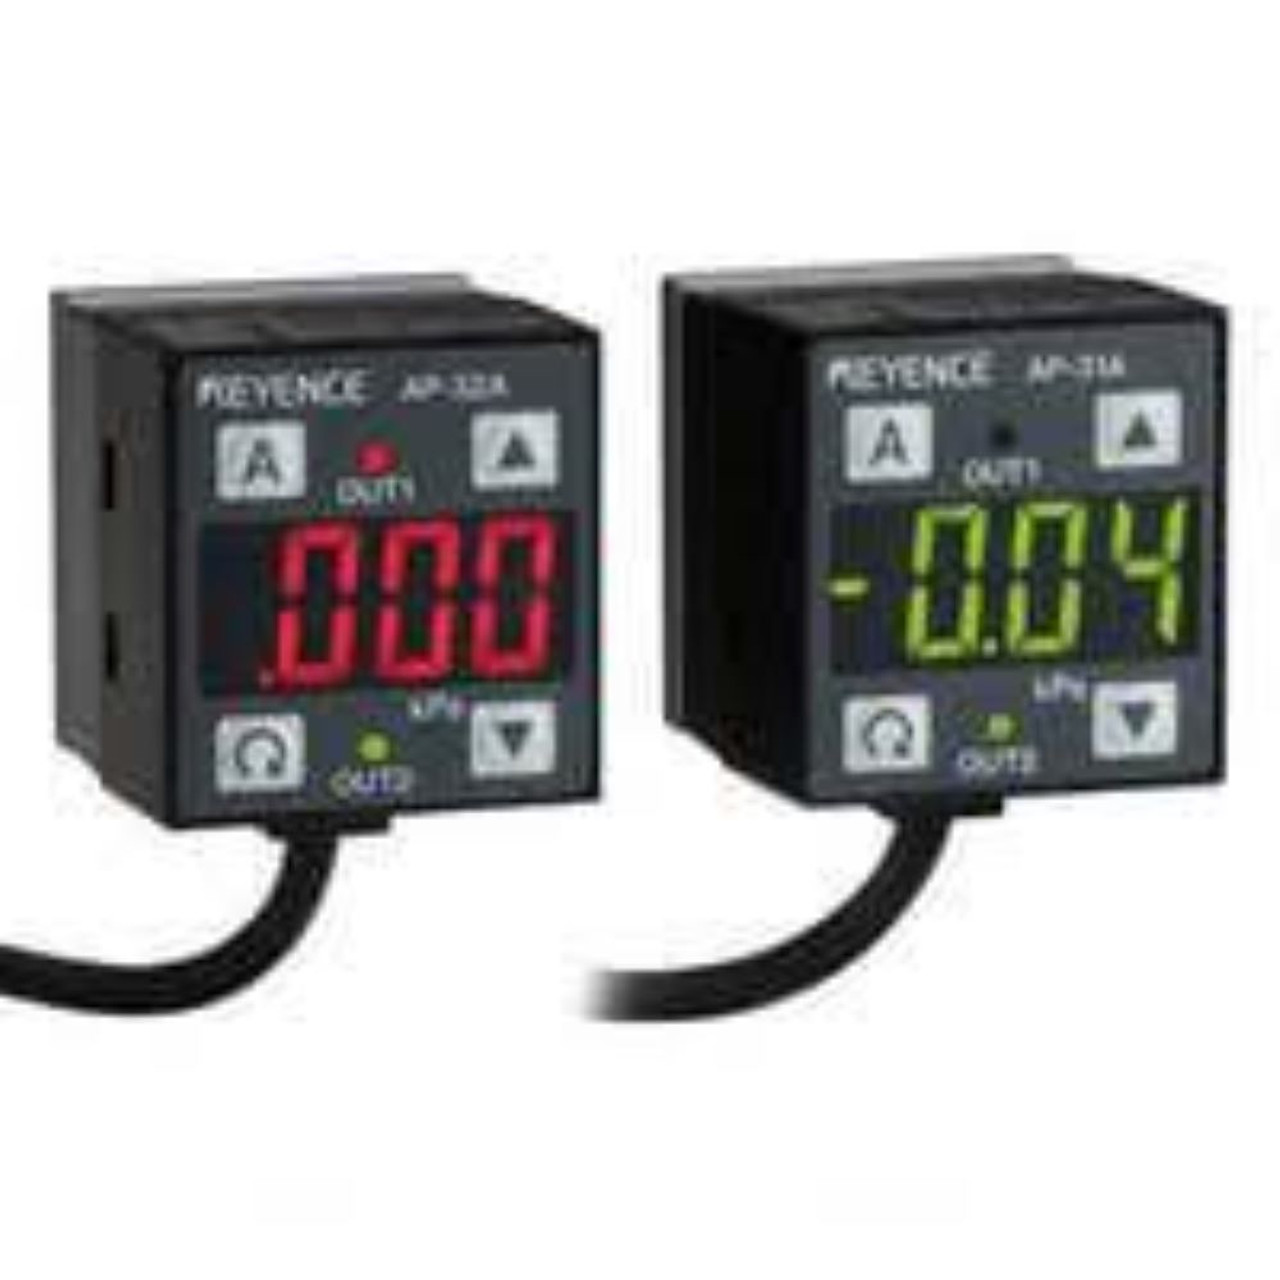 Keyence AP-31PA 2-Color Digital Display Pressure Sensor, Negative-Pressure Type [New]